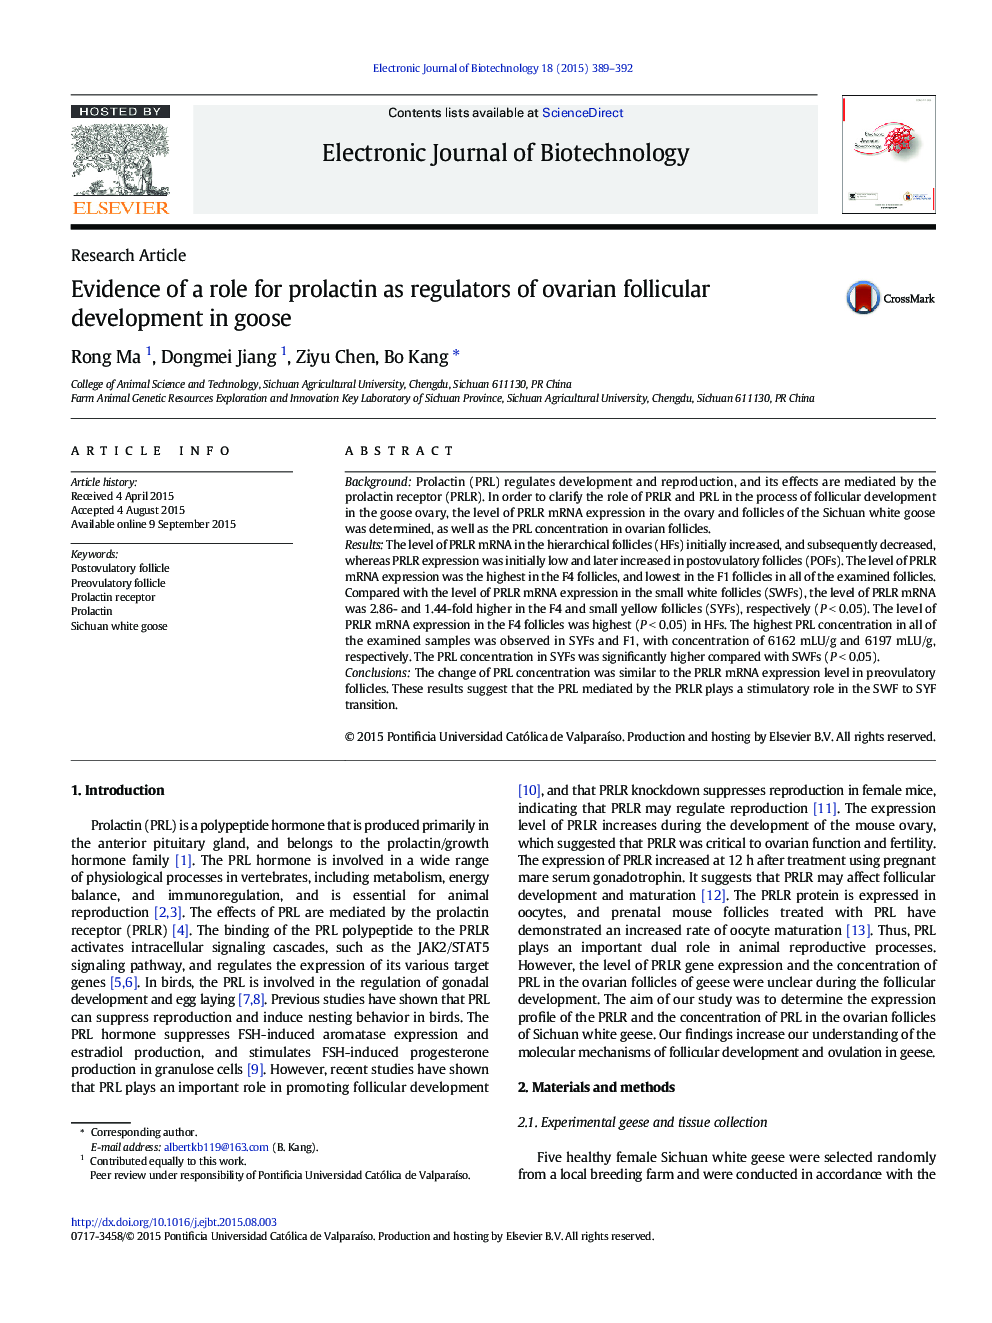 Evidence of a role for prolactin as regulators of ovarian follicular development in goose 